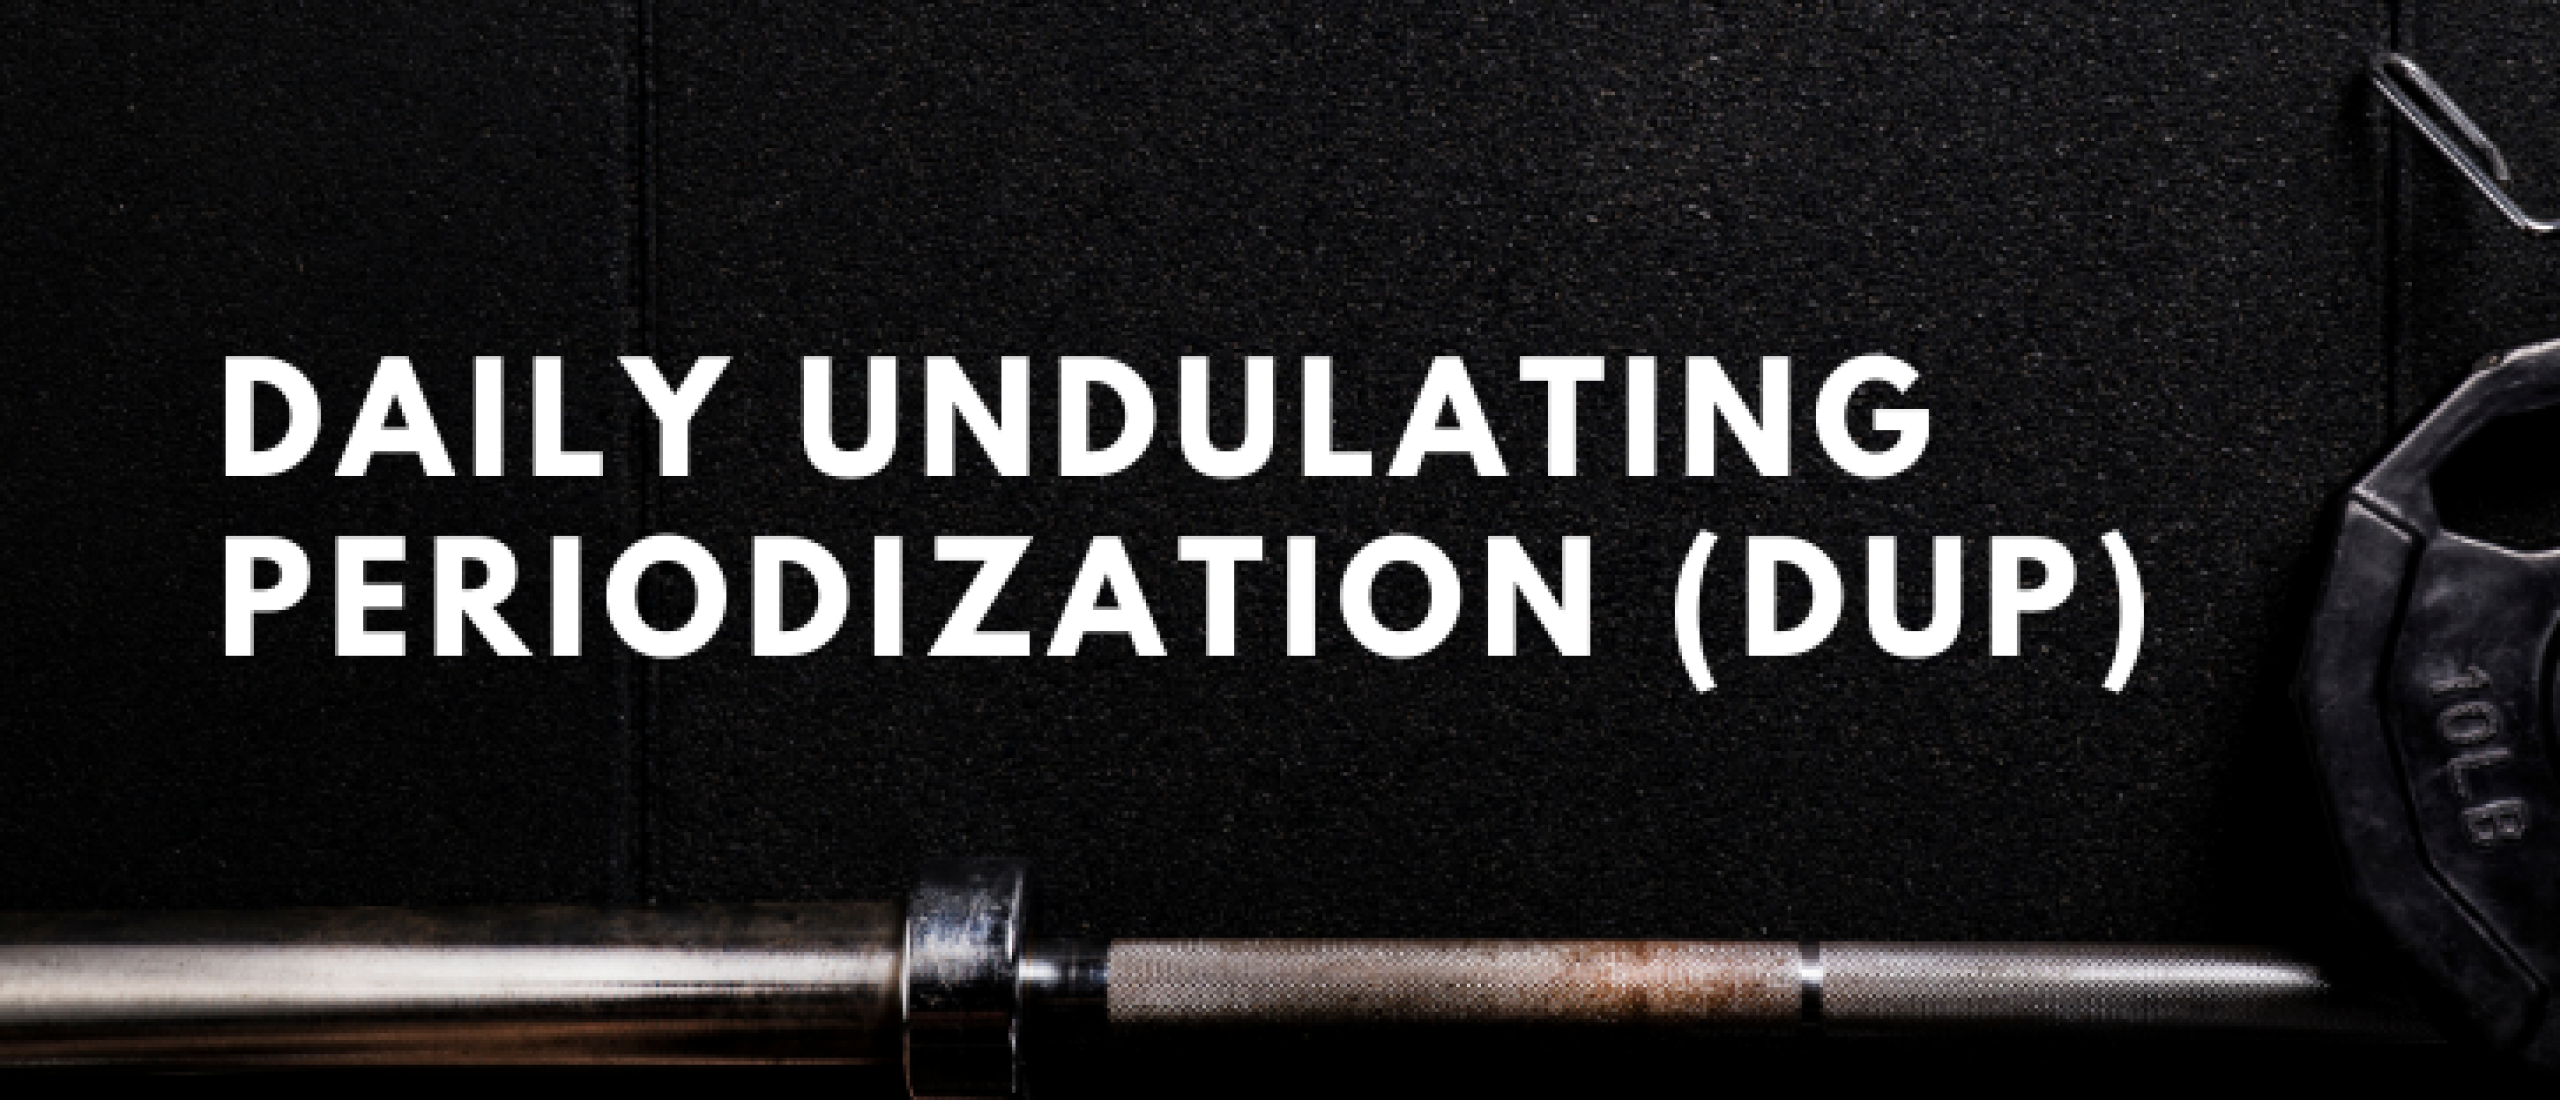 Daily Undulating Periodization (DUP)